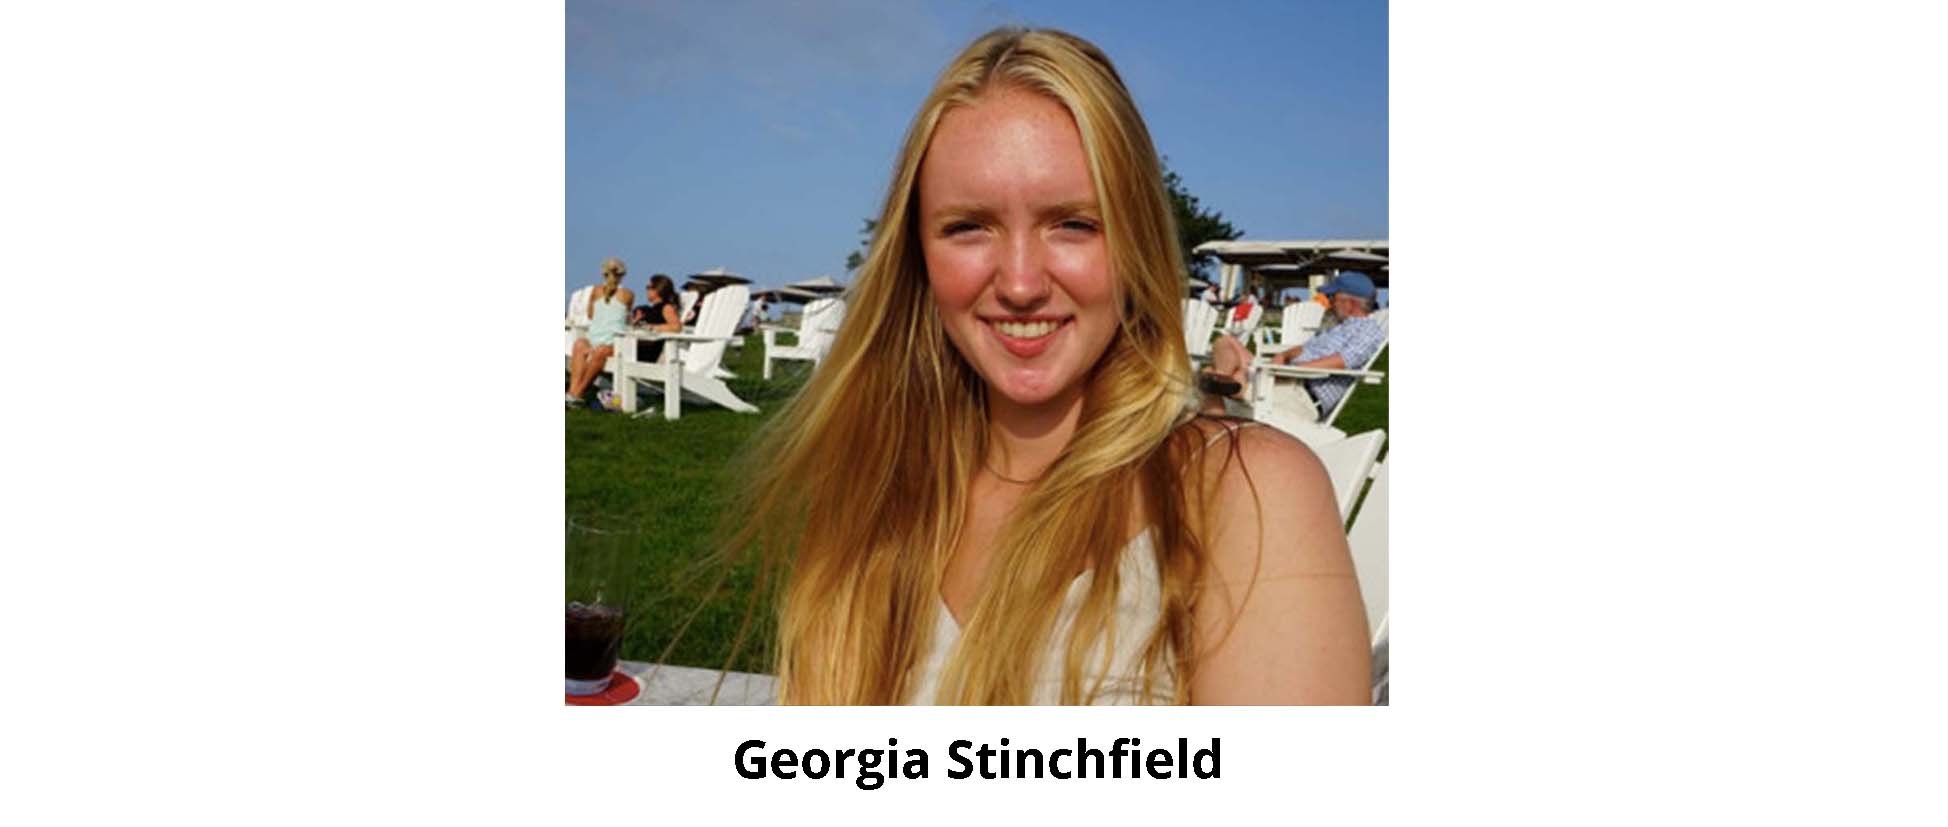 Georgia Stinchfield